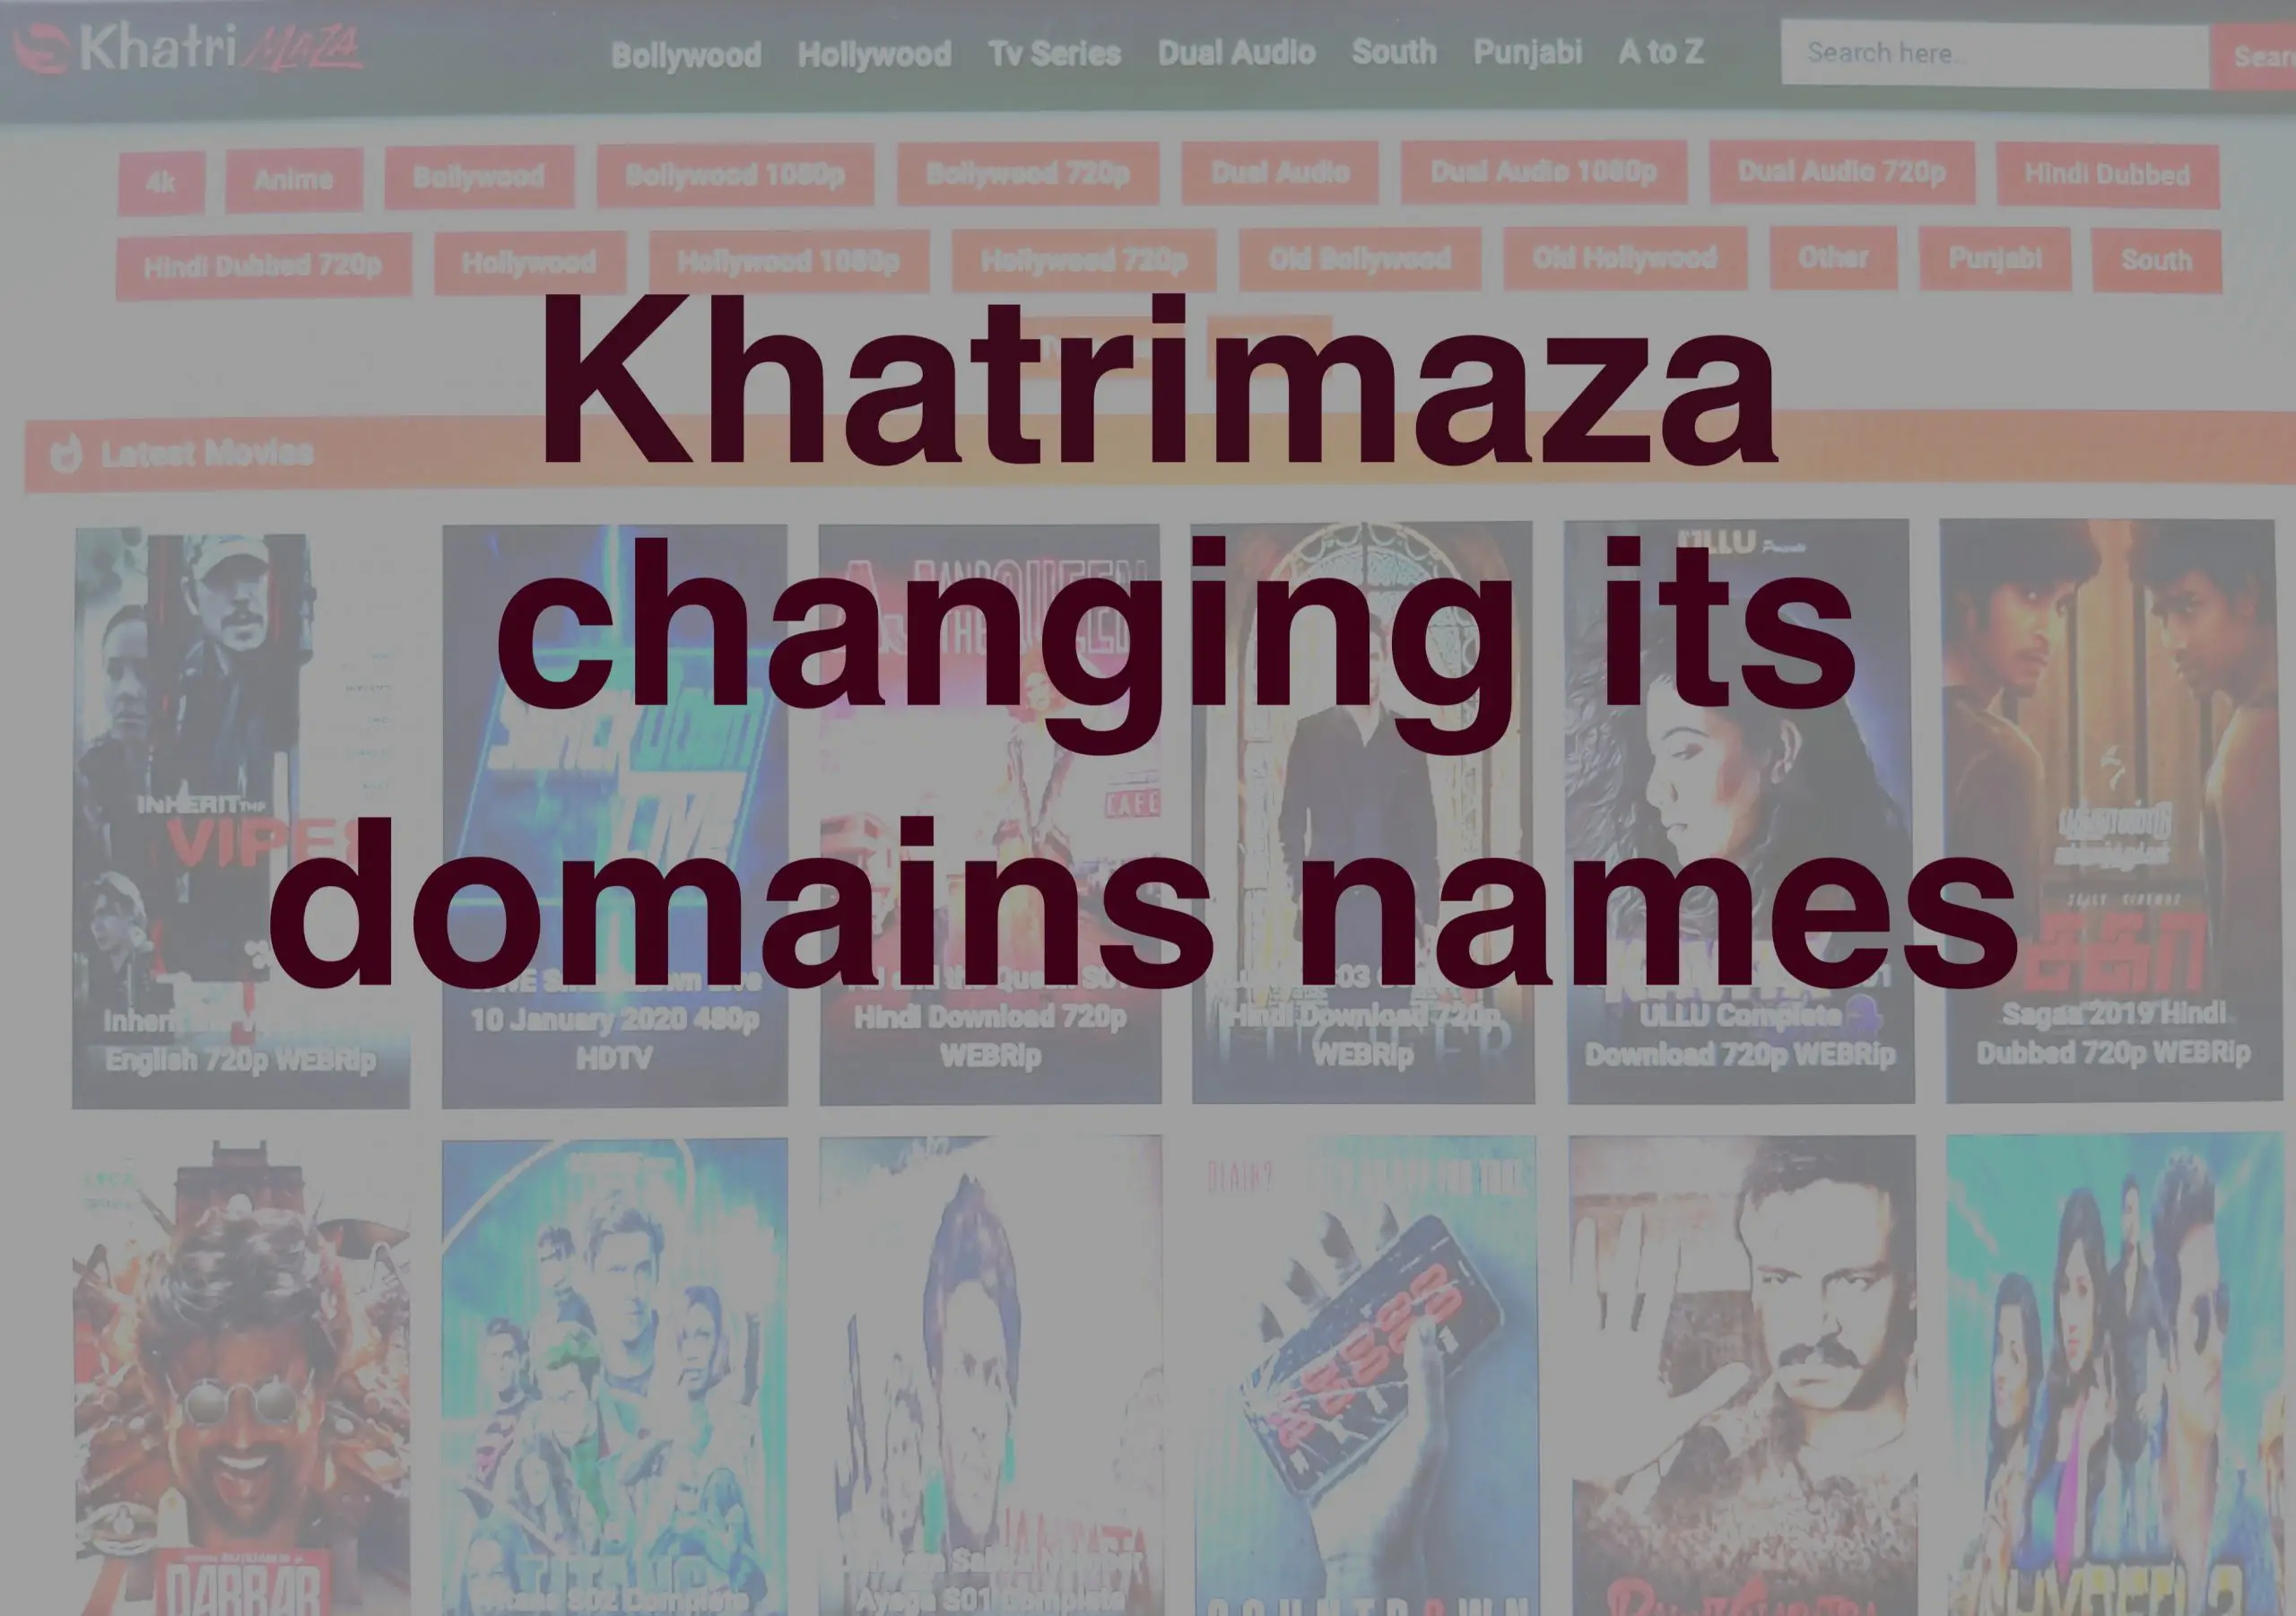 Khatrimaza Changing its domain names